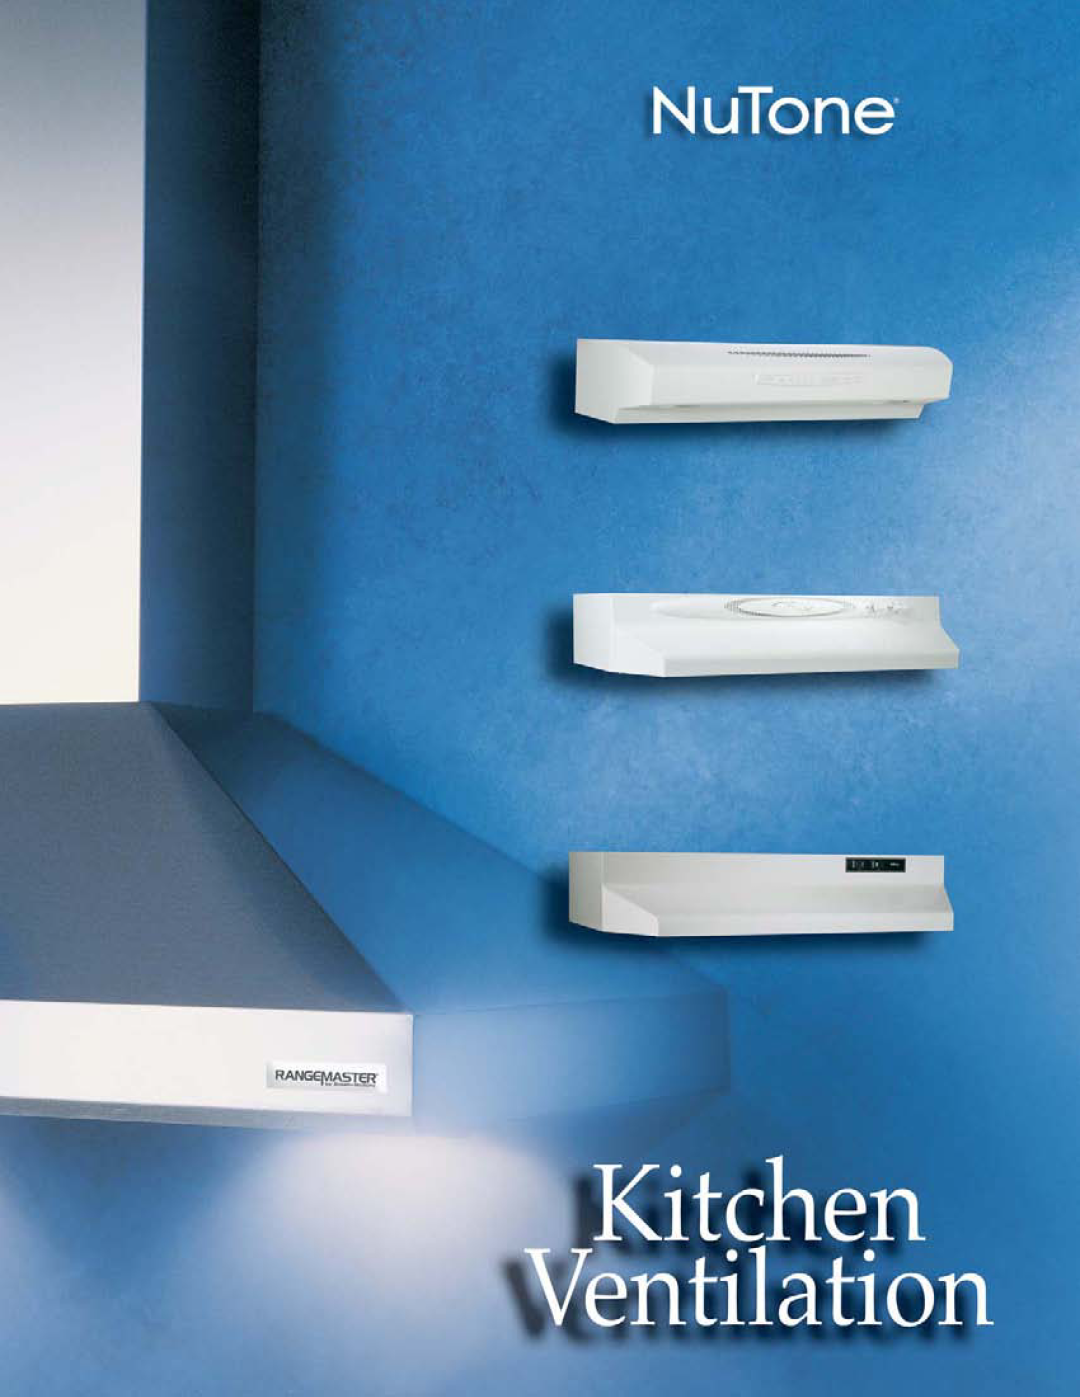 NuTone kitchen ventilation manual 